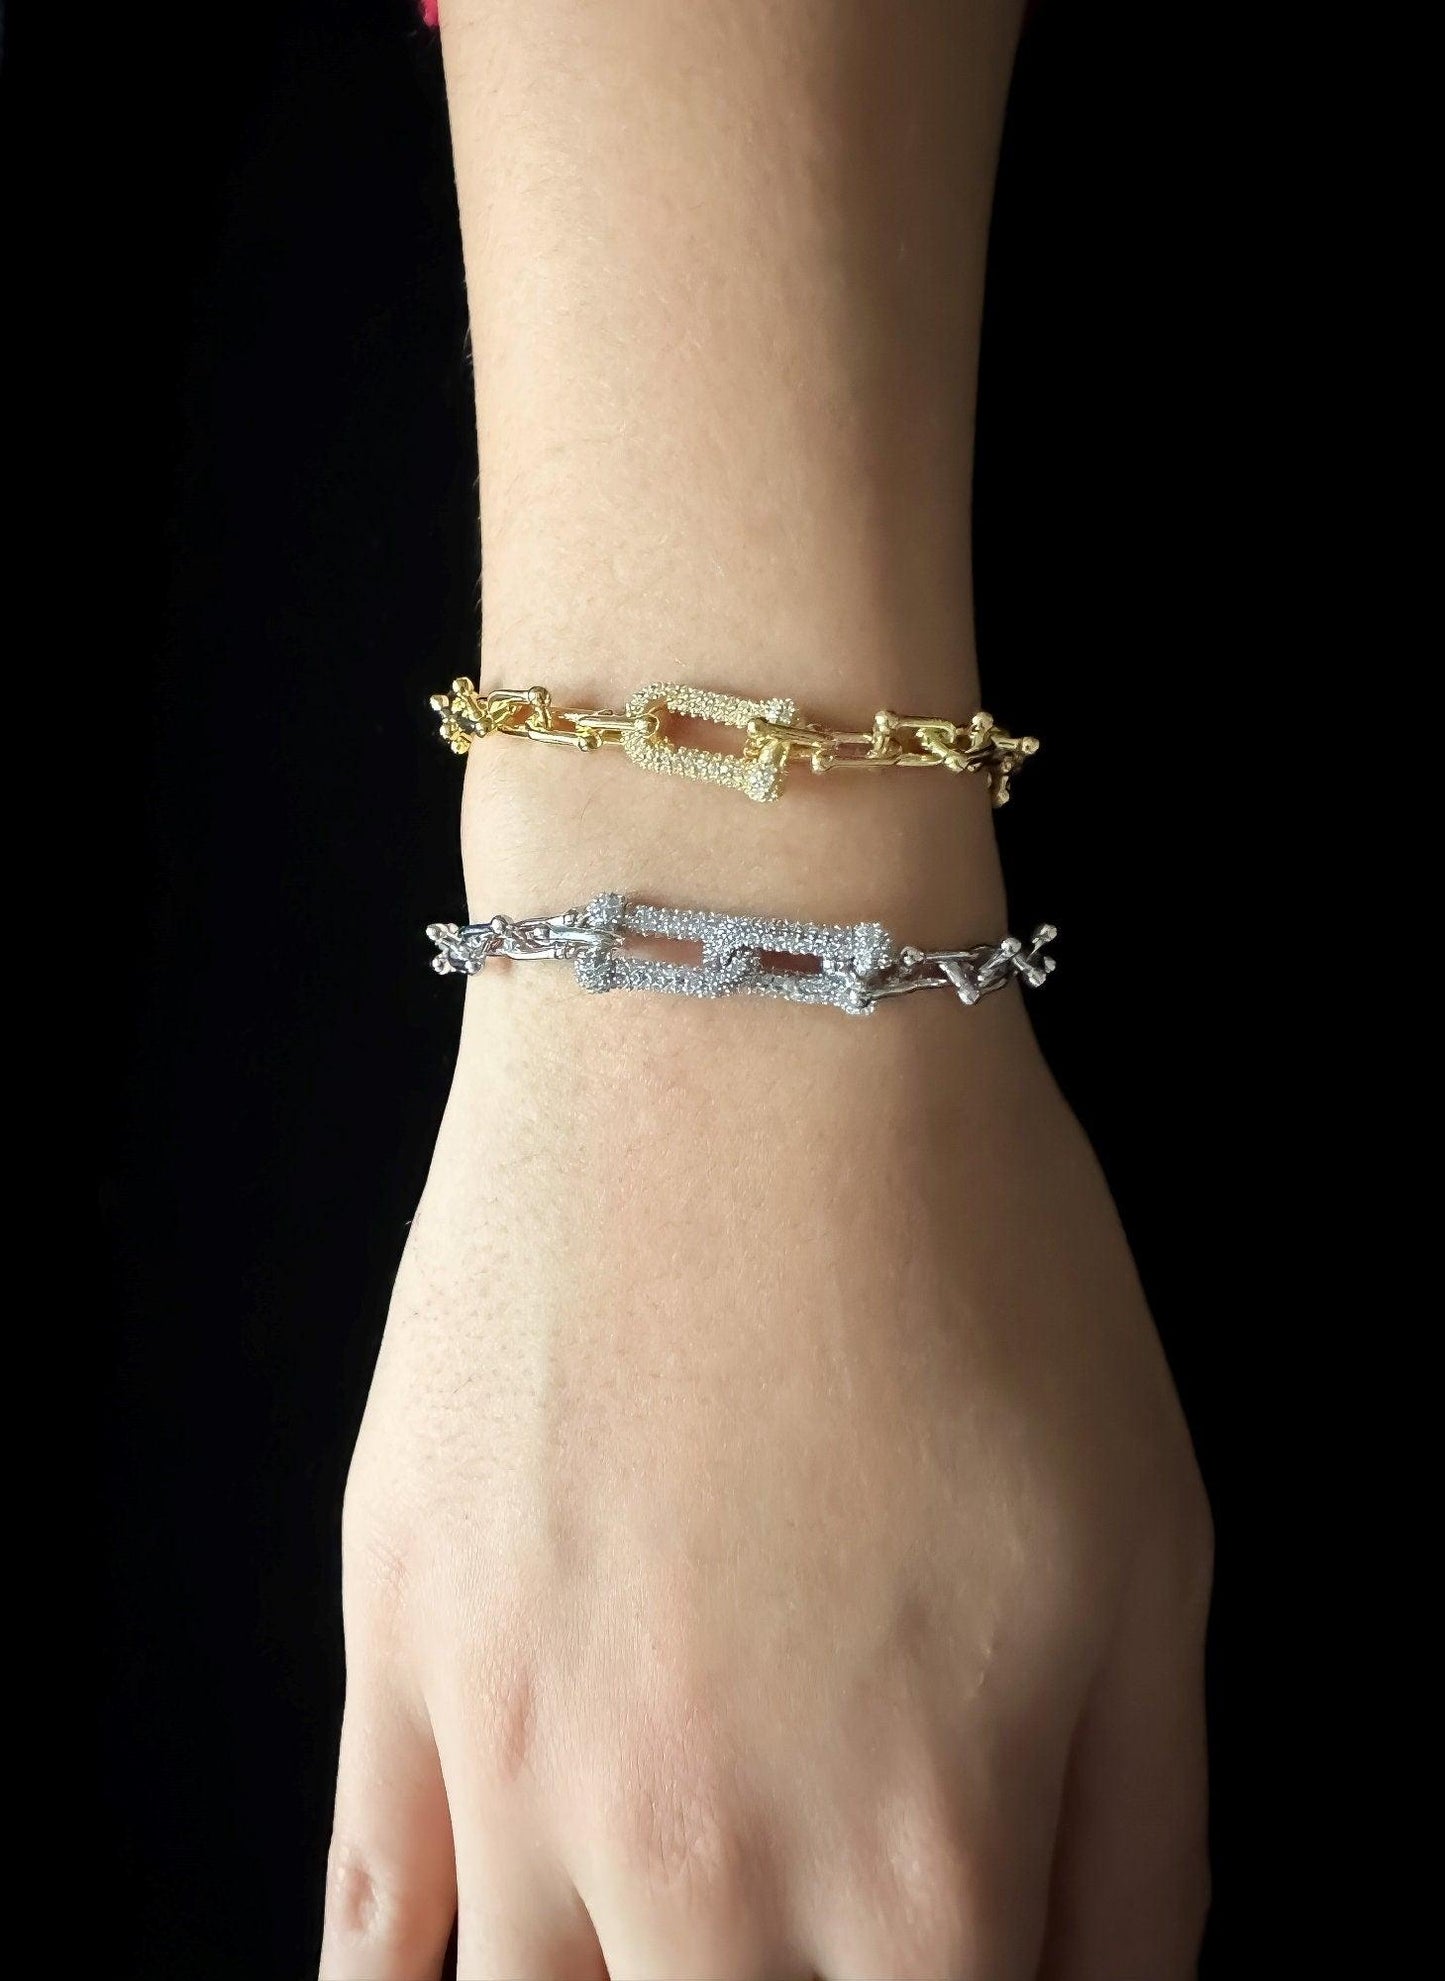 22k Gold Planet Tiffany Co Bracelet Luxury Jewelry For Her - Tracesilver